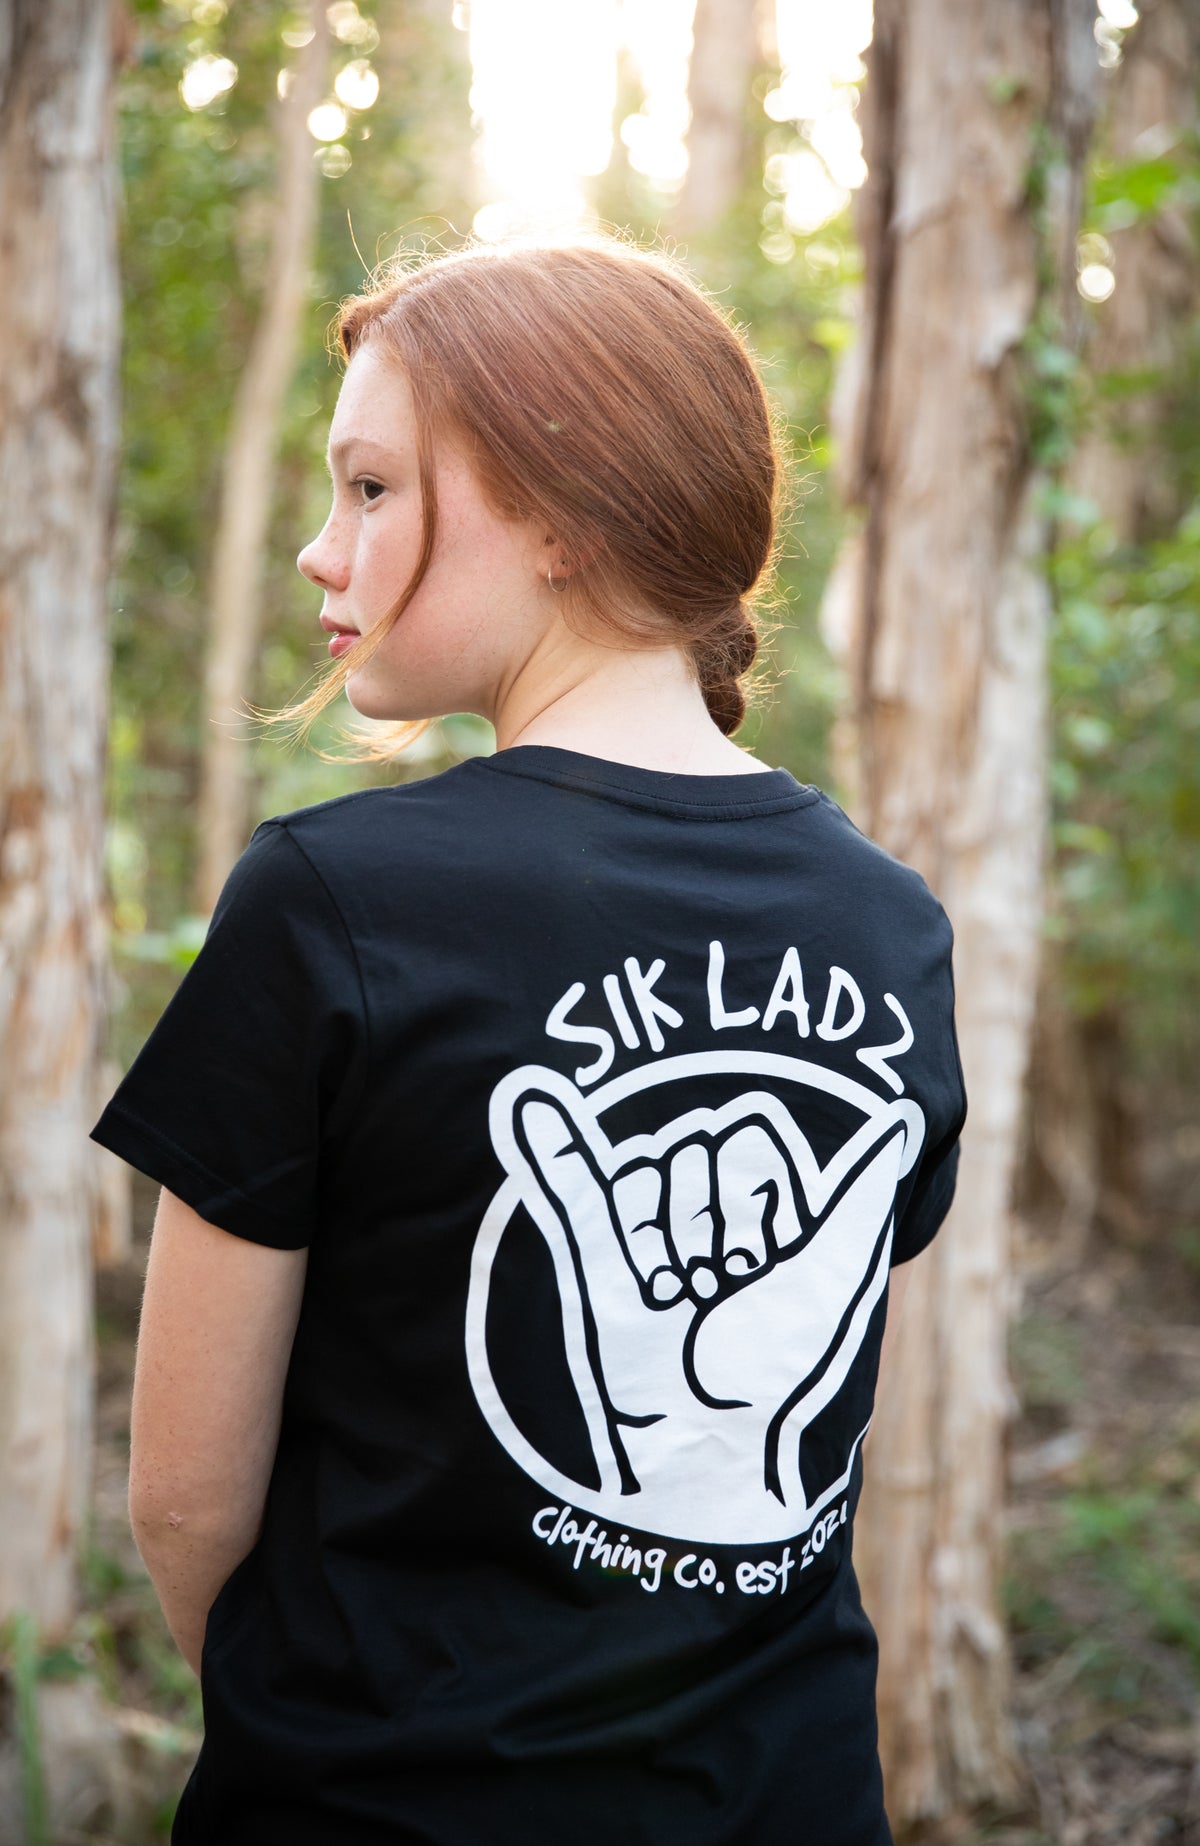 Sik Ladz Original Design Tee Kids & Youth